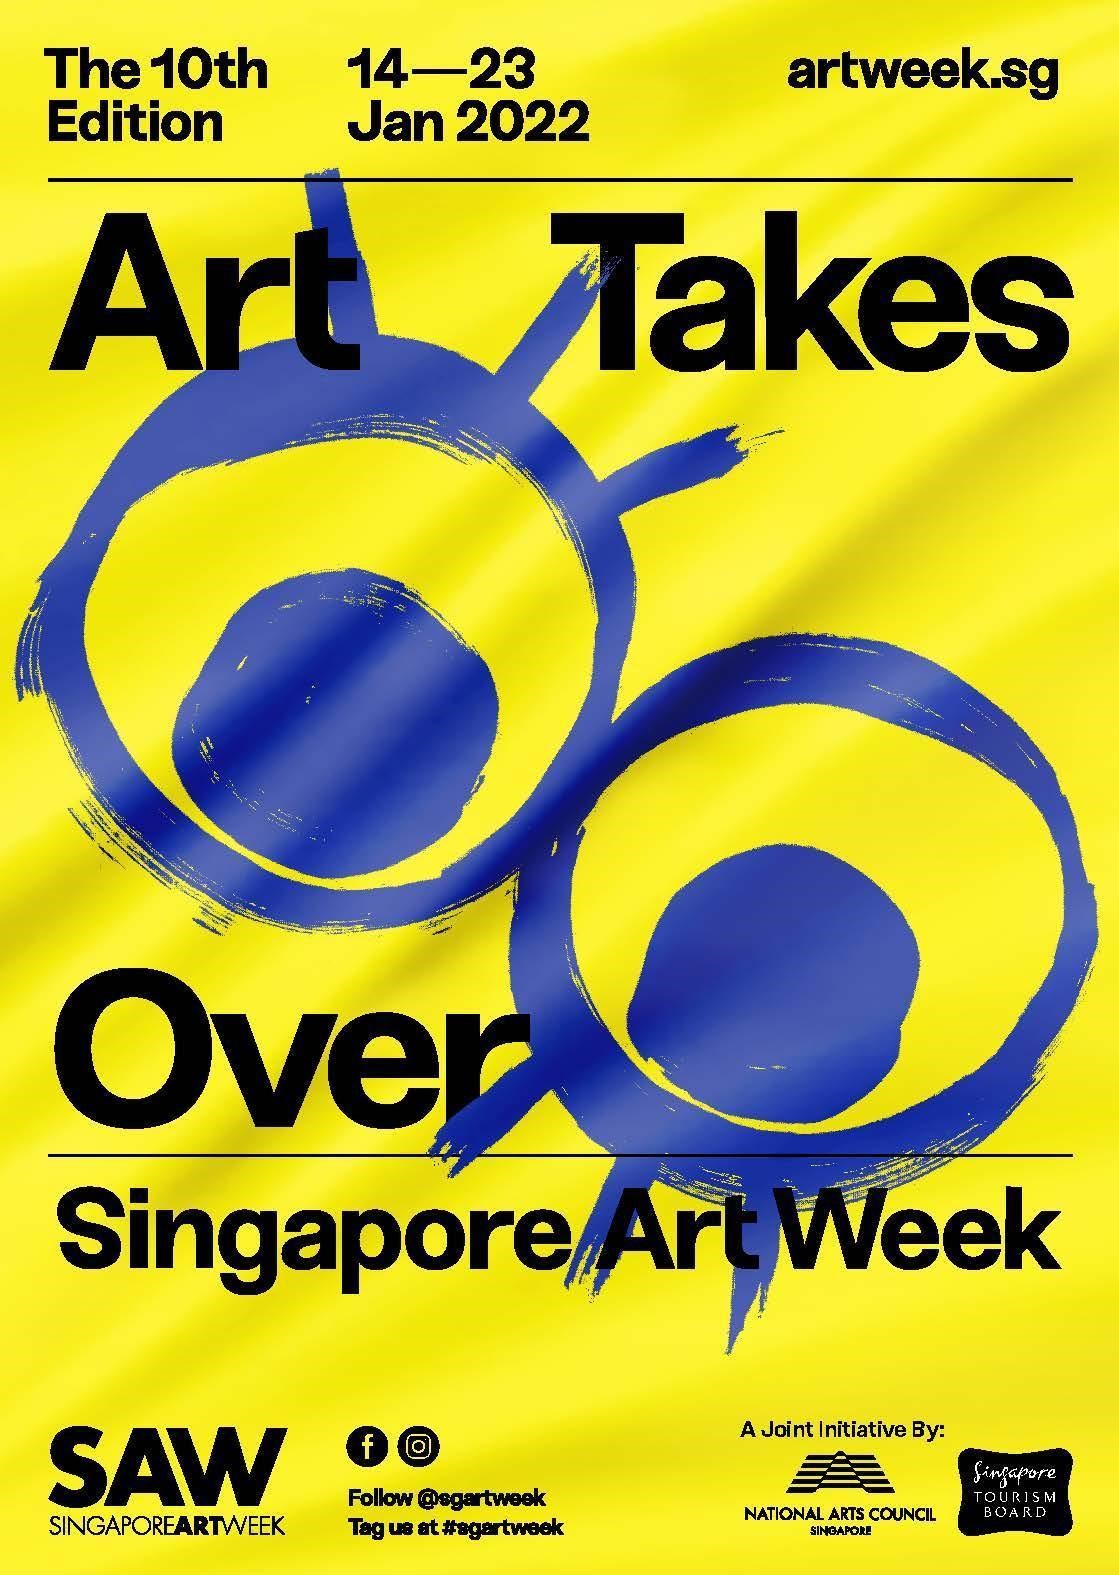 Art Takes Over Singapore Art Week Poster